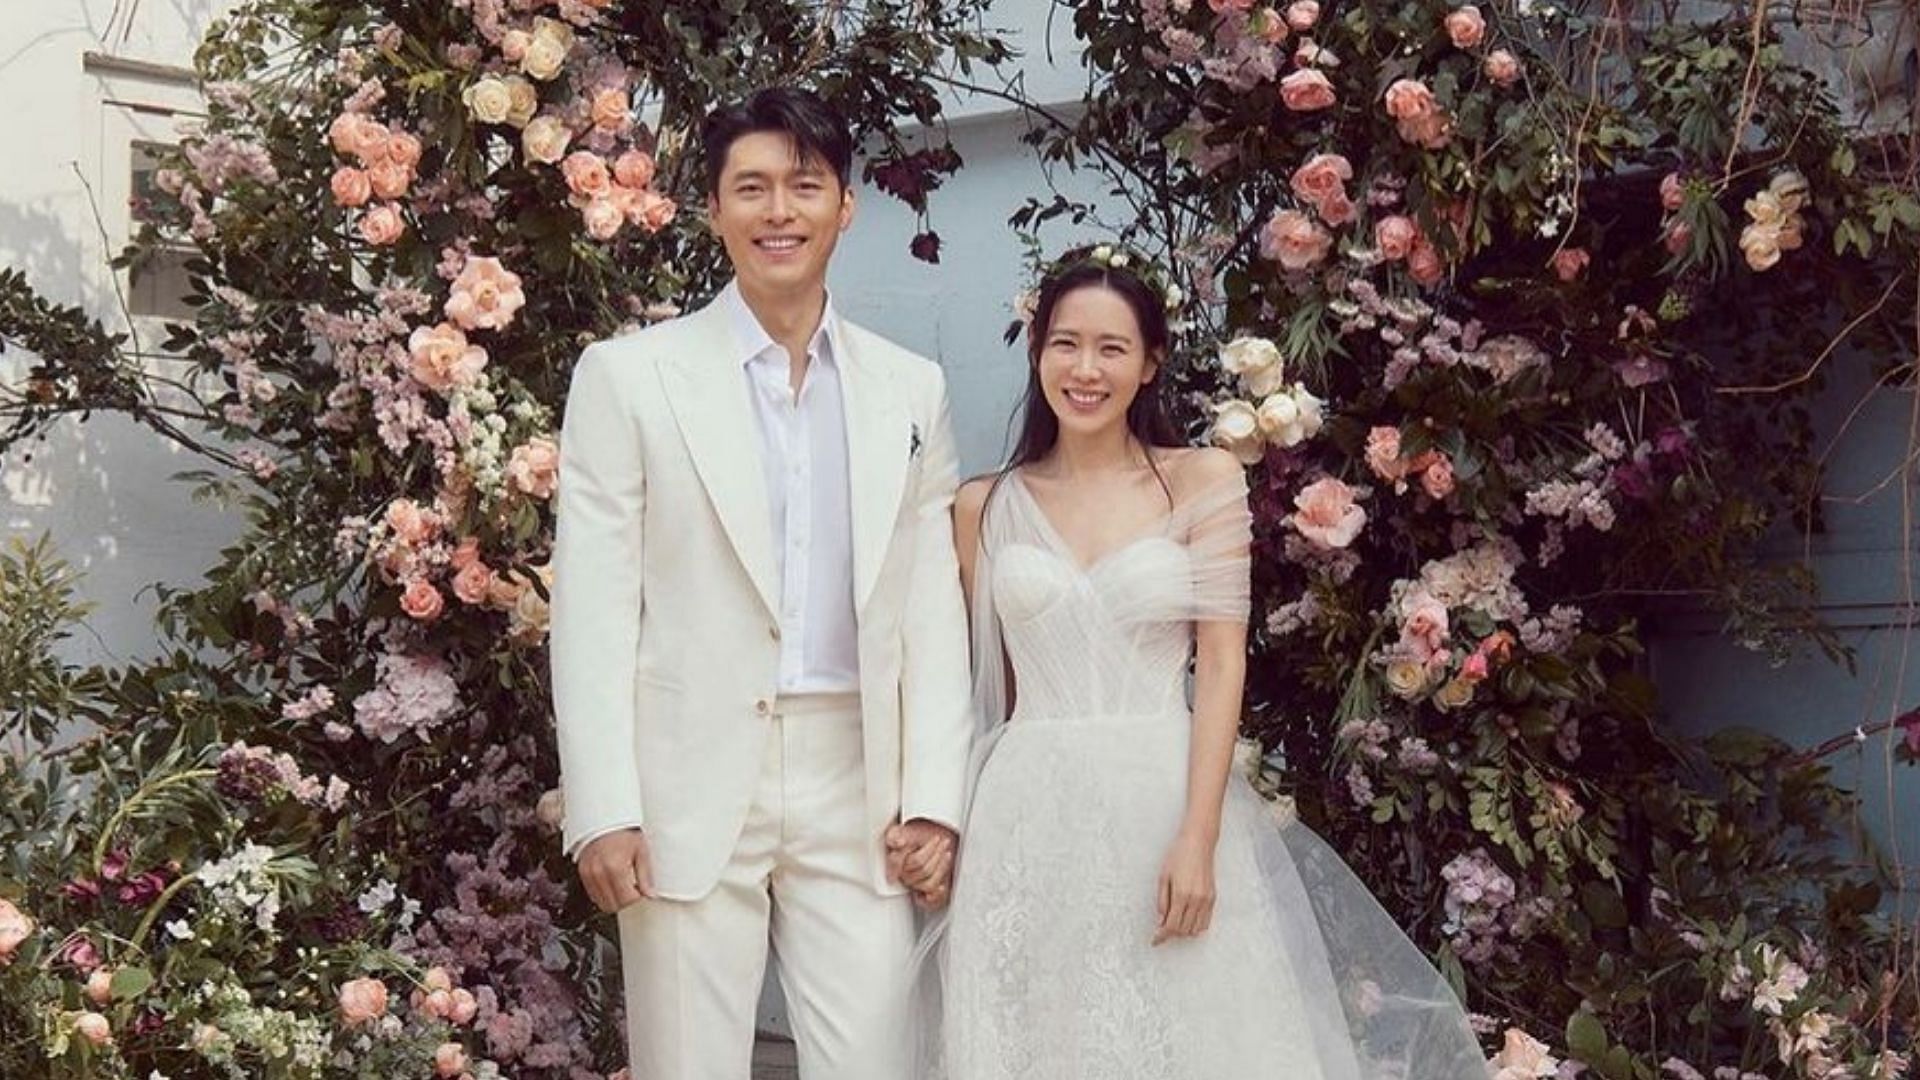 Hyun Bin and Son Ye-jin on their wedding day (Image via @vast.ent/Instagram)